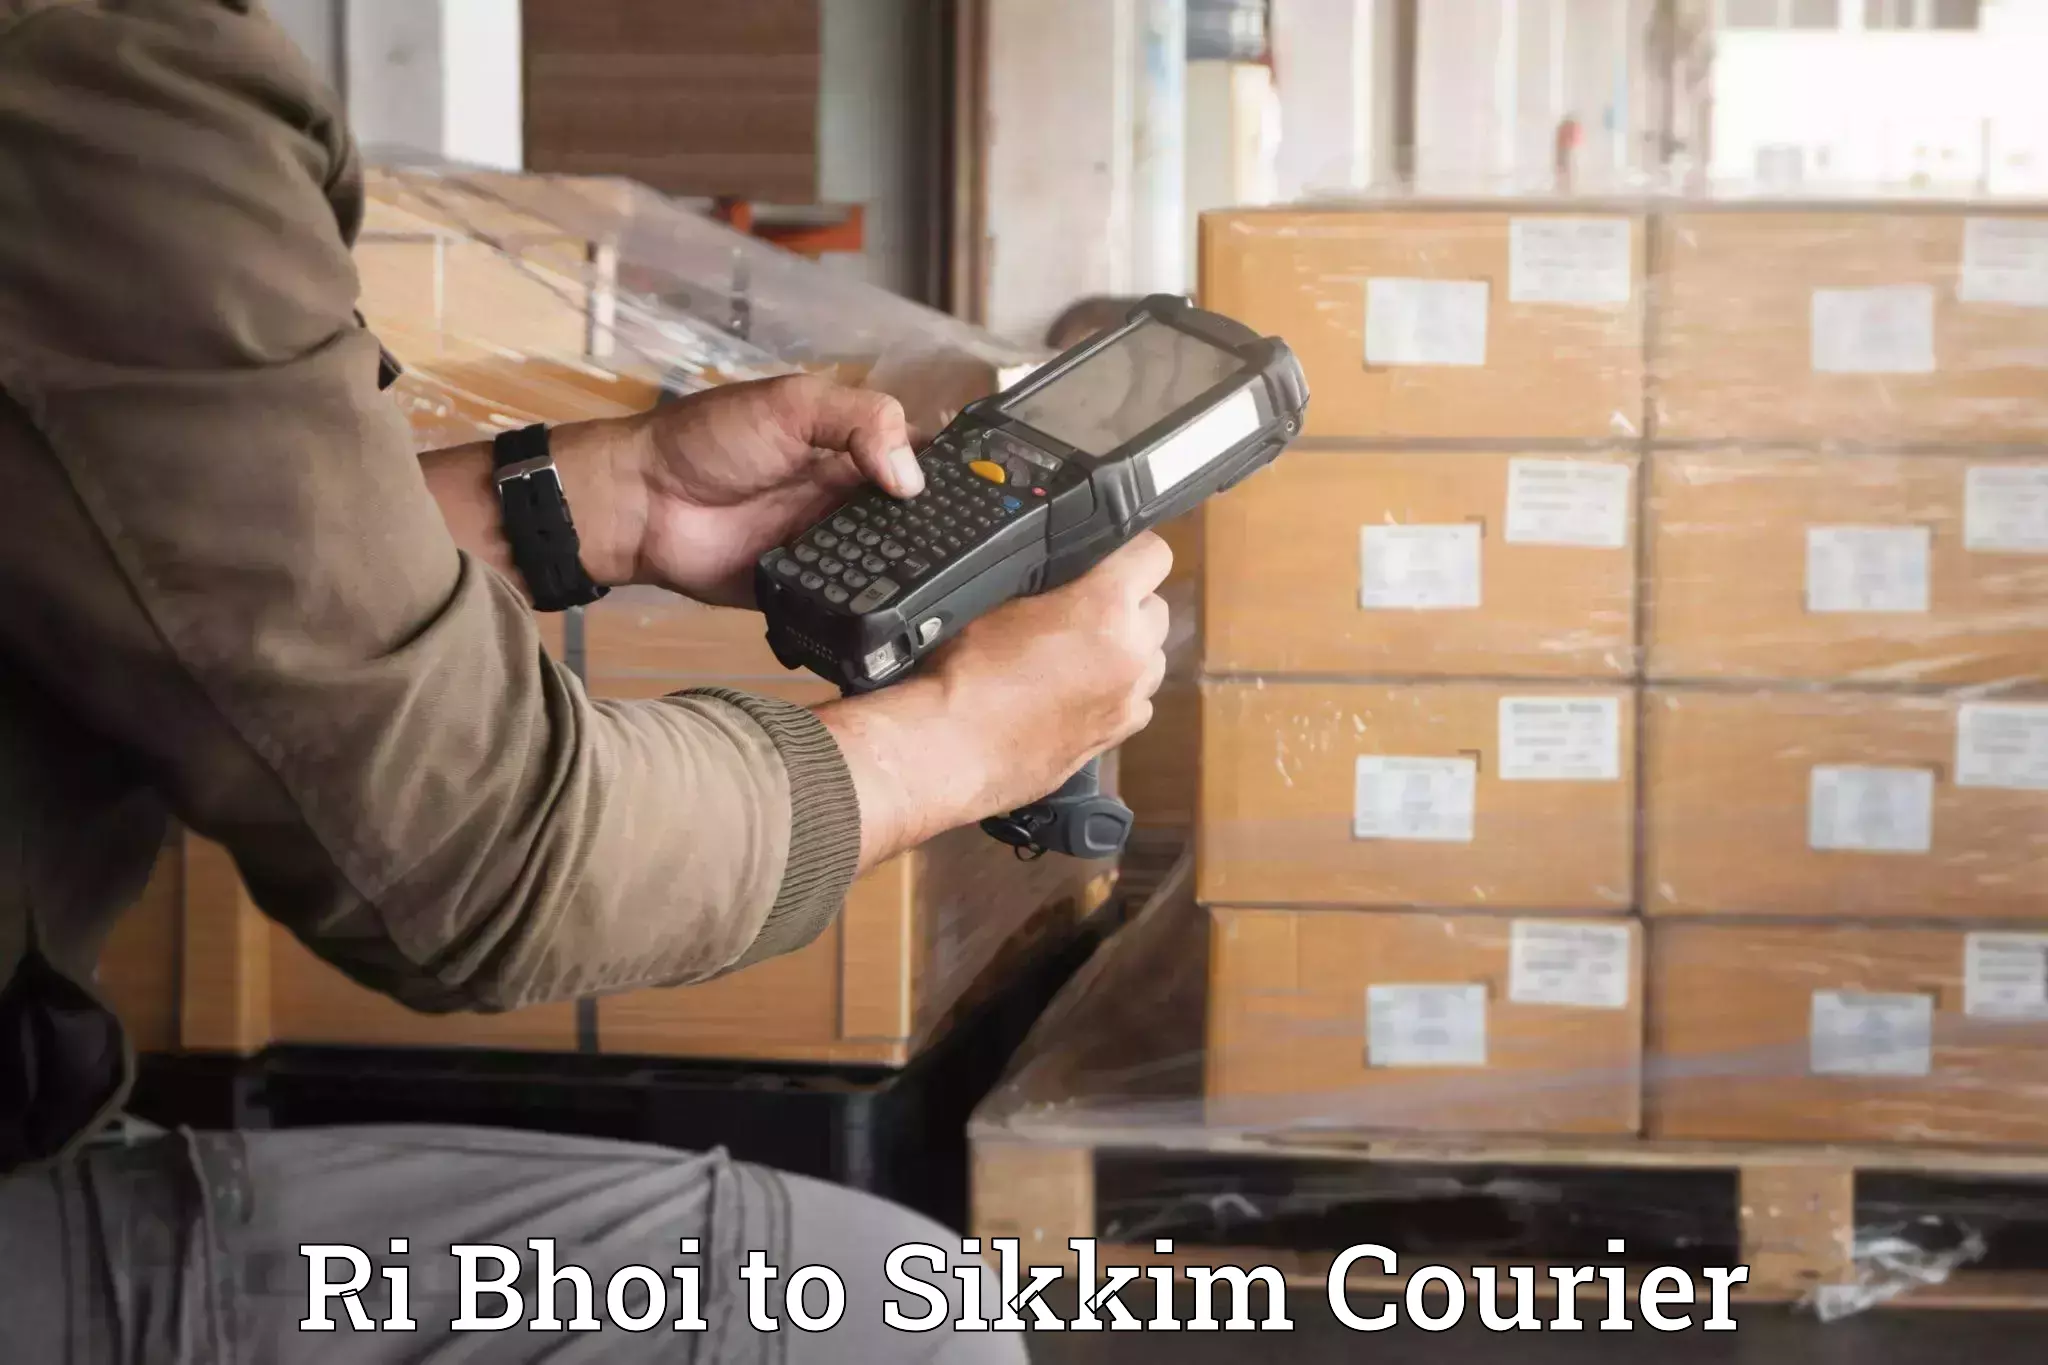 Professional movers Ri Bhoi to Sikkim